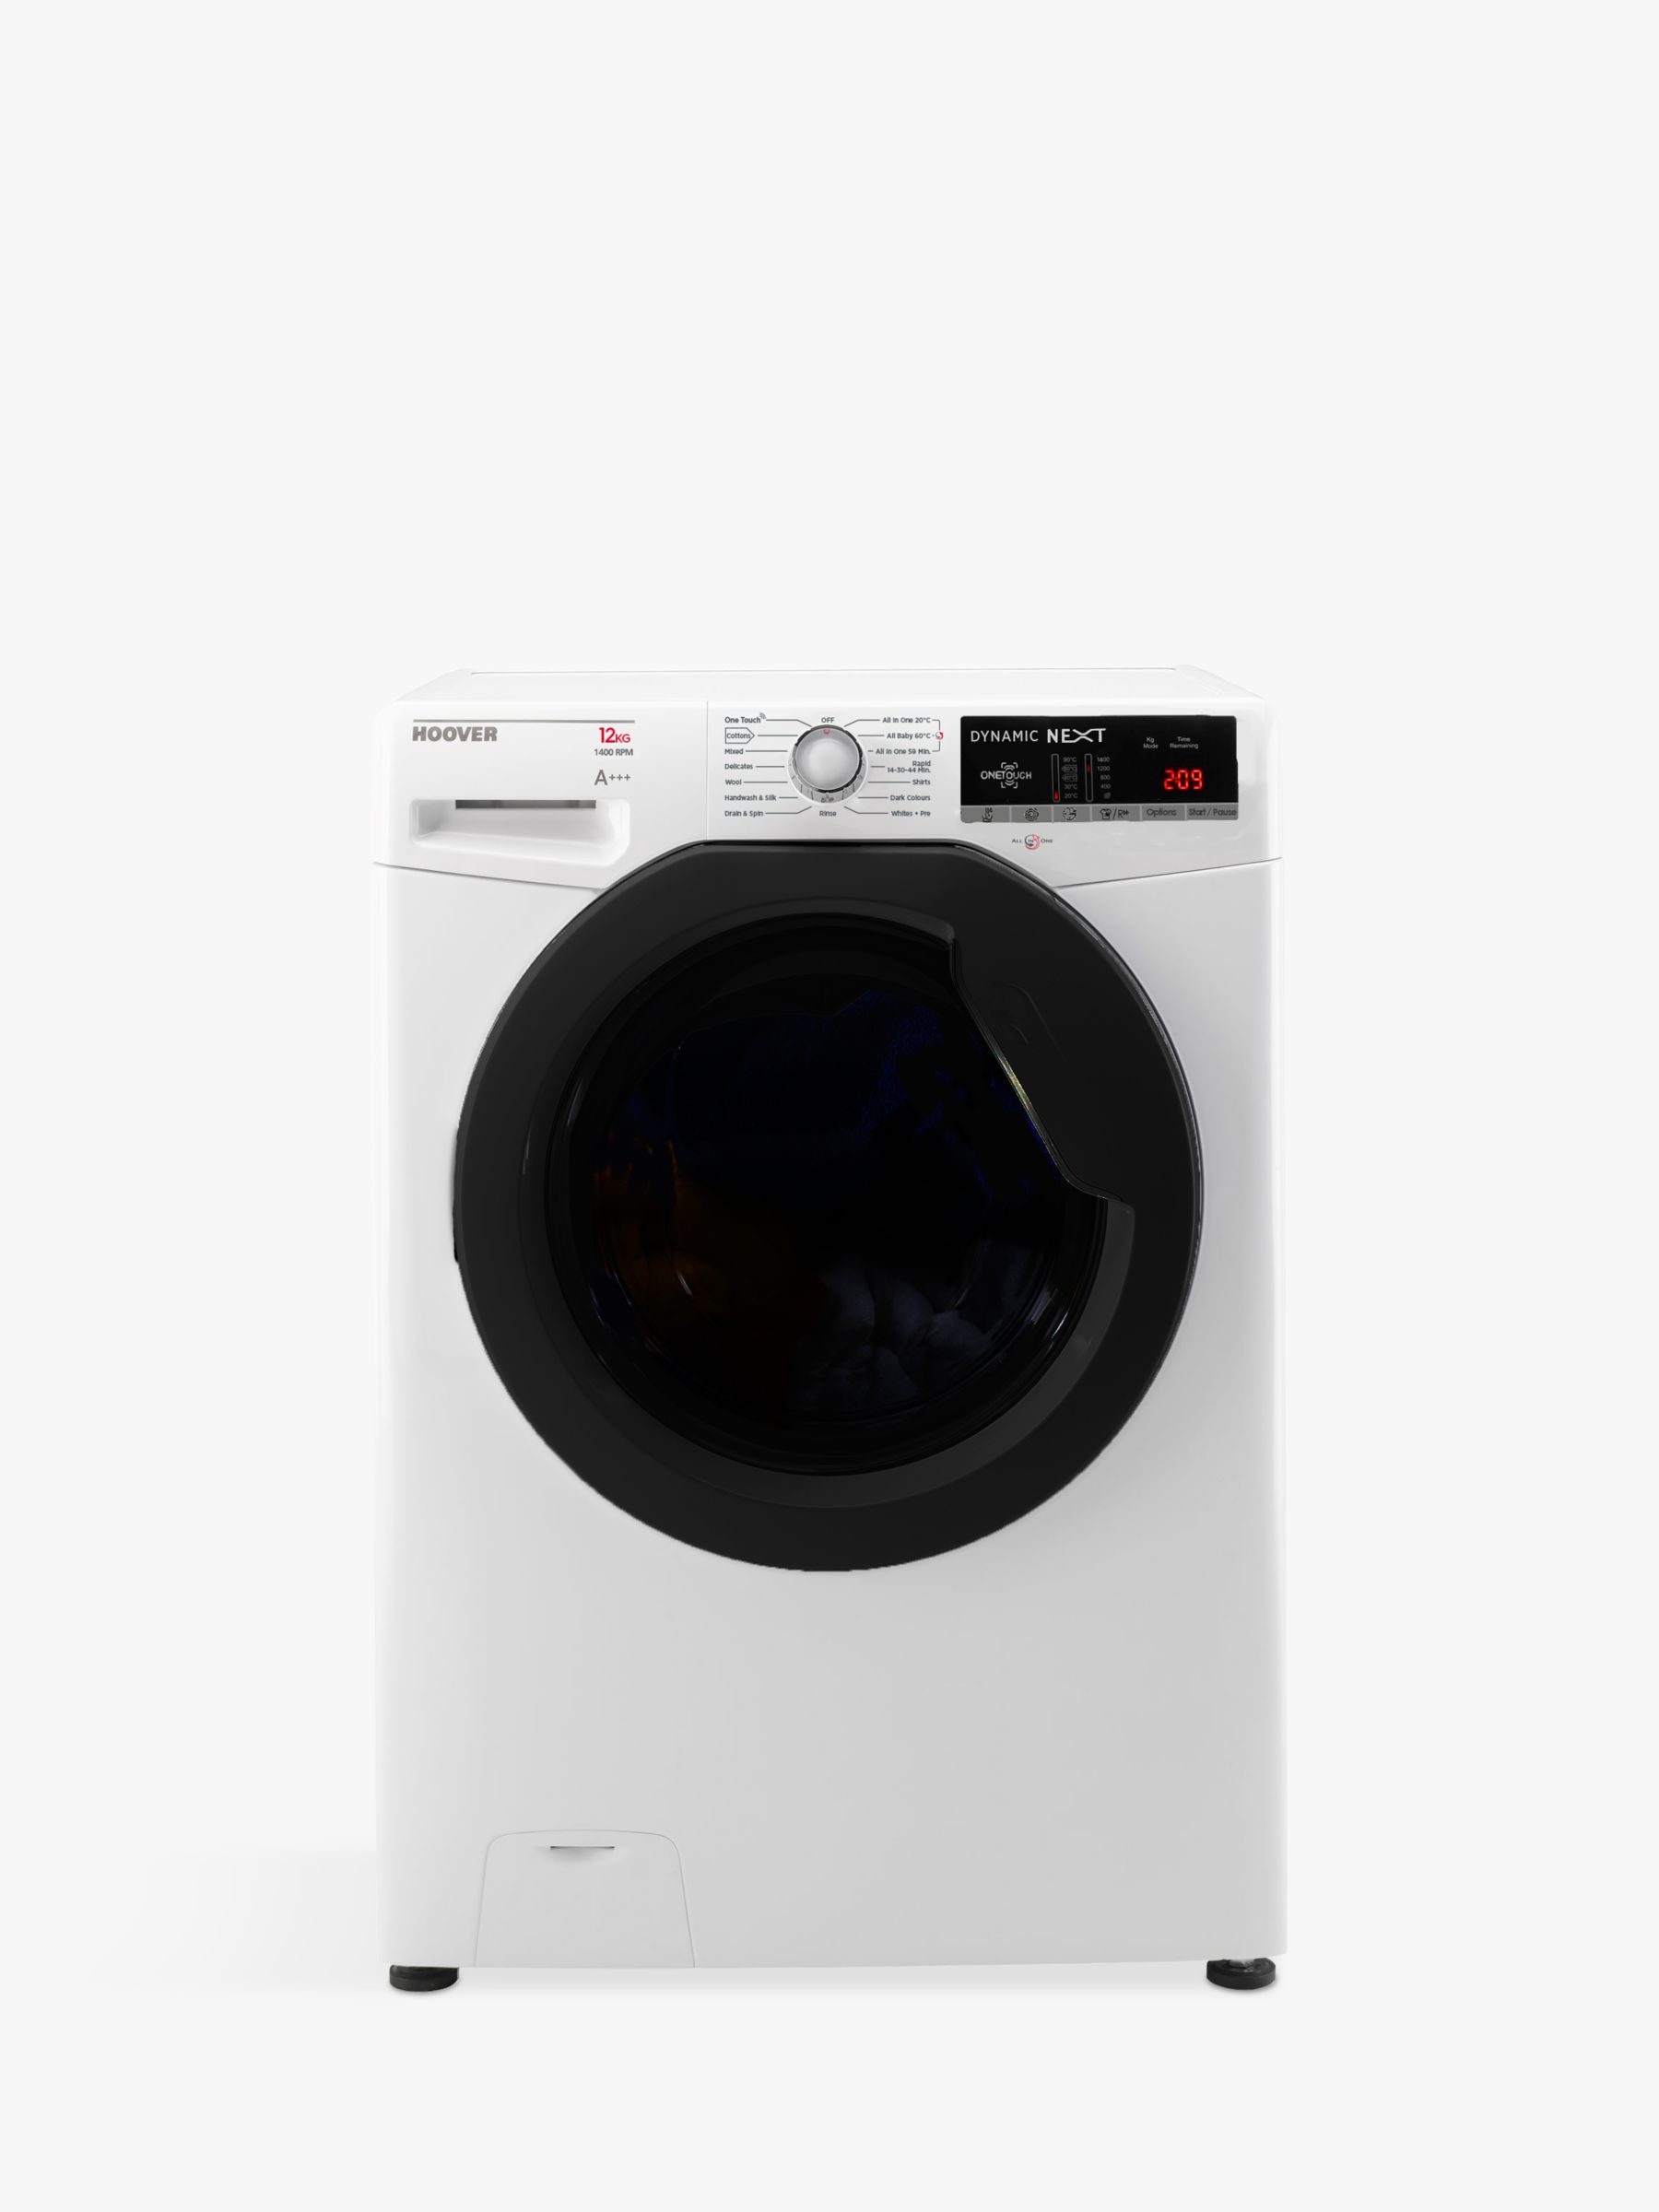 Hoover Dynamic Next DXOA412AHFN Washing Machine, 12kg Load, 1600rpm, A+++ Energy Rating, White